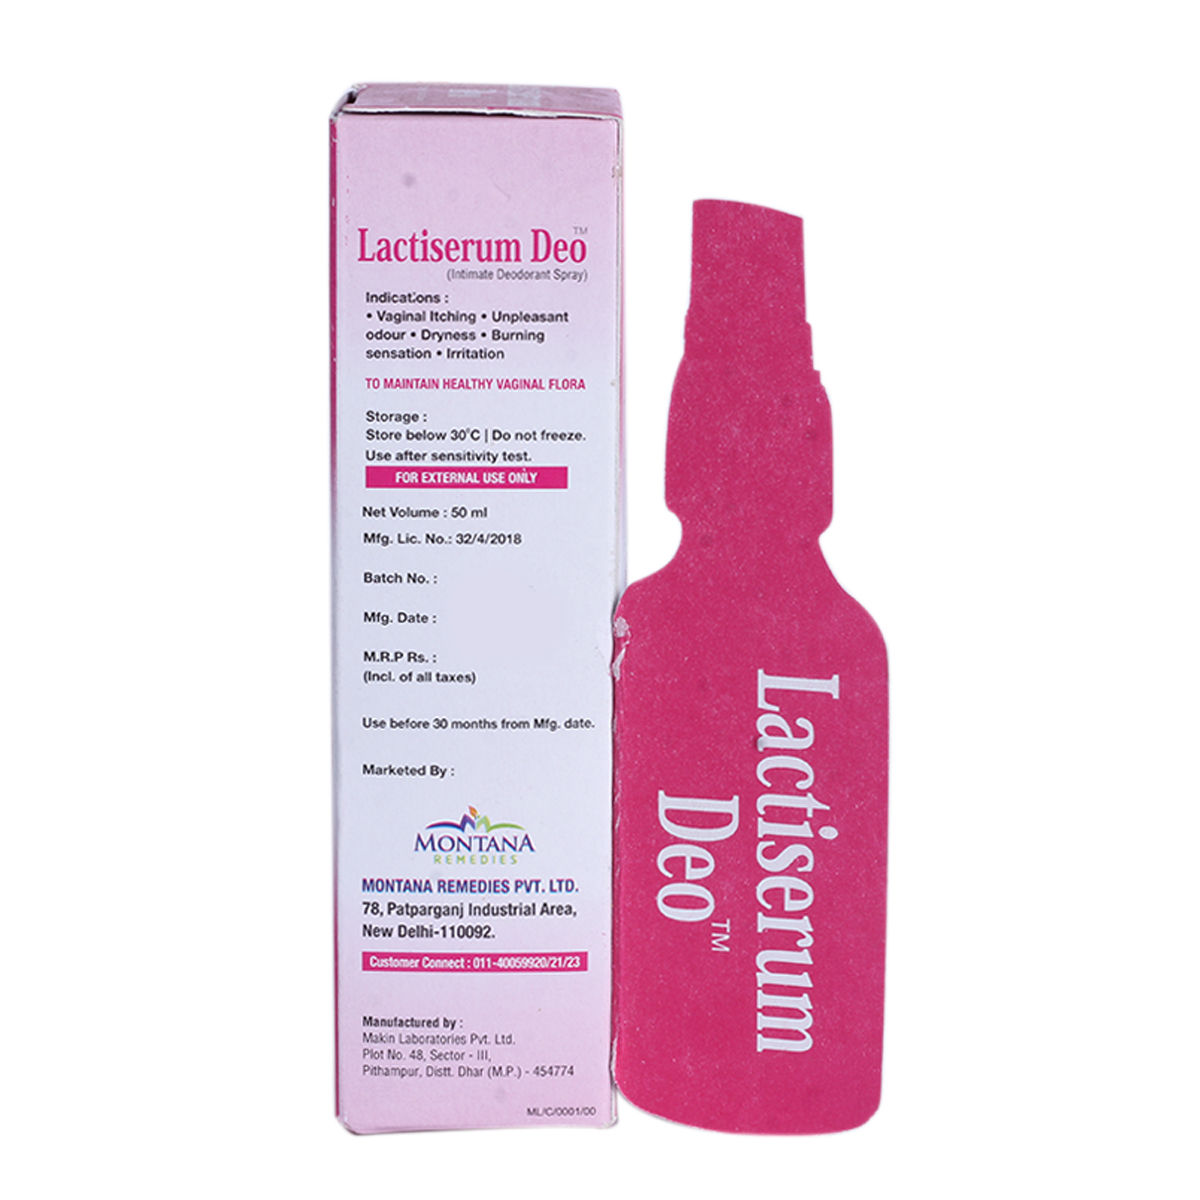 Lactiserum Intimate Deo Spray, 50 ml, Pack of 1 Spray